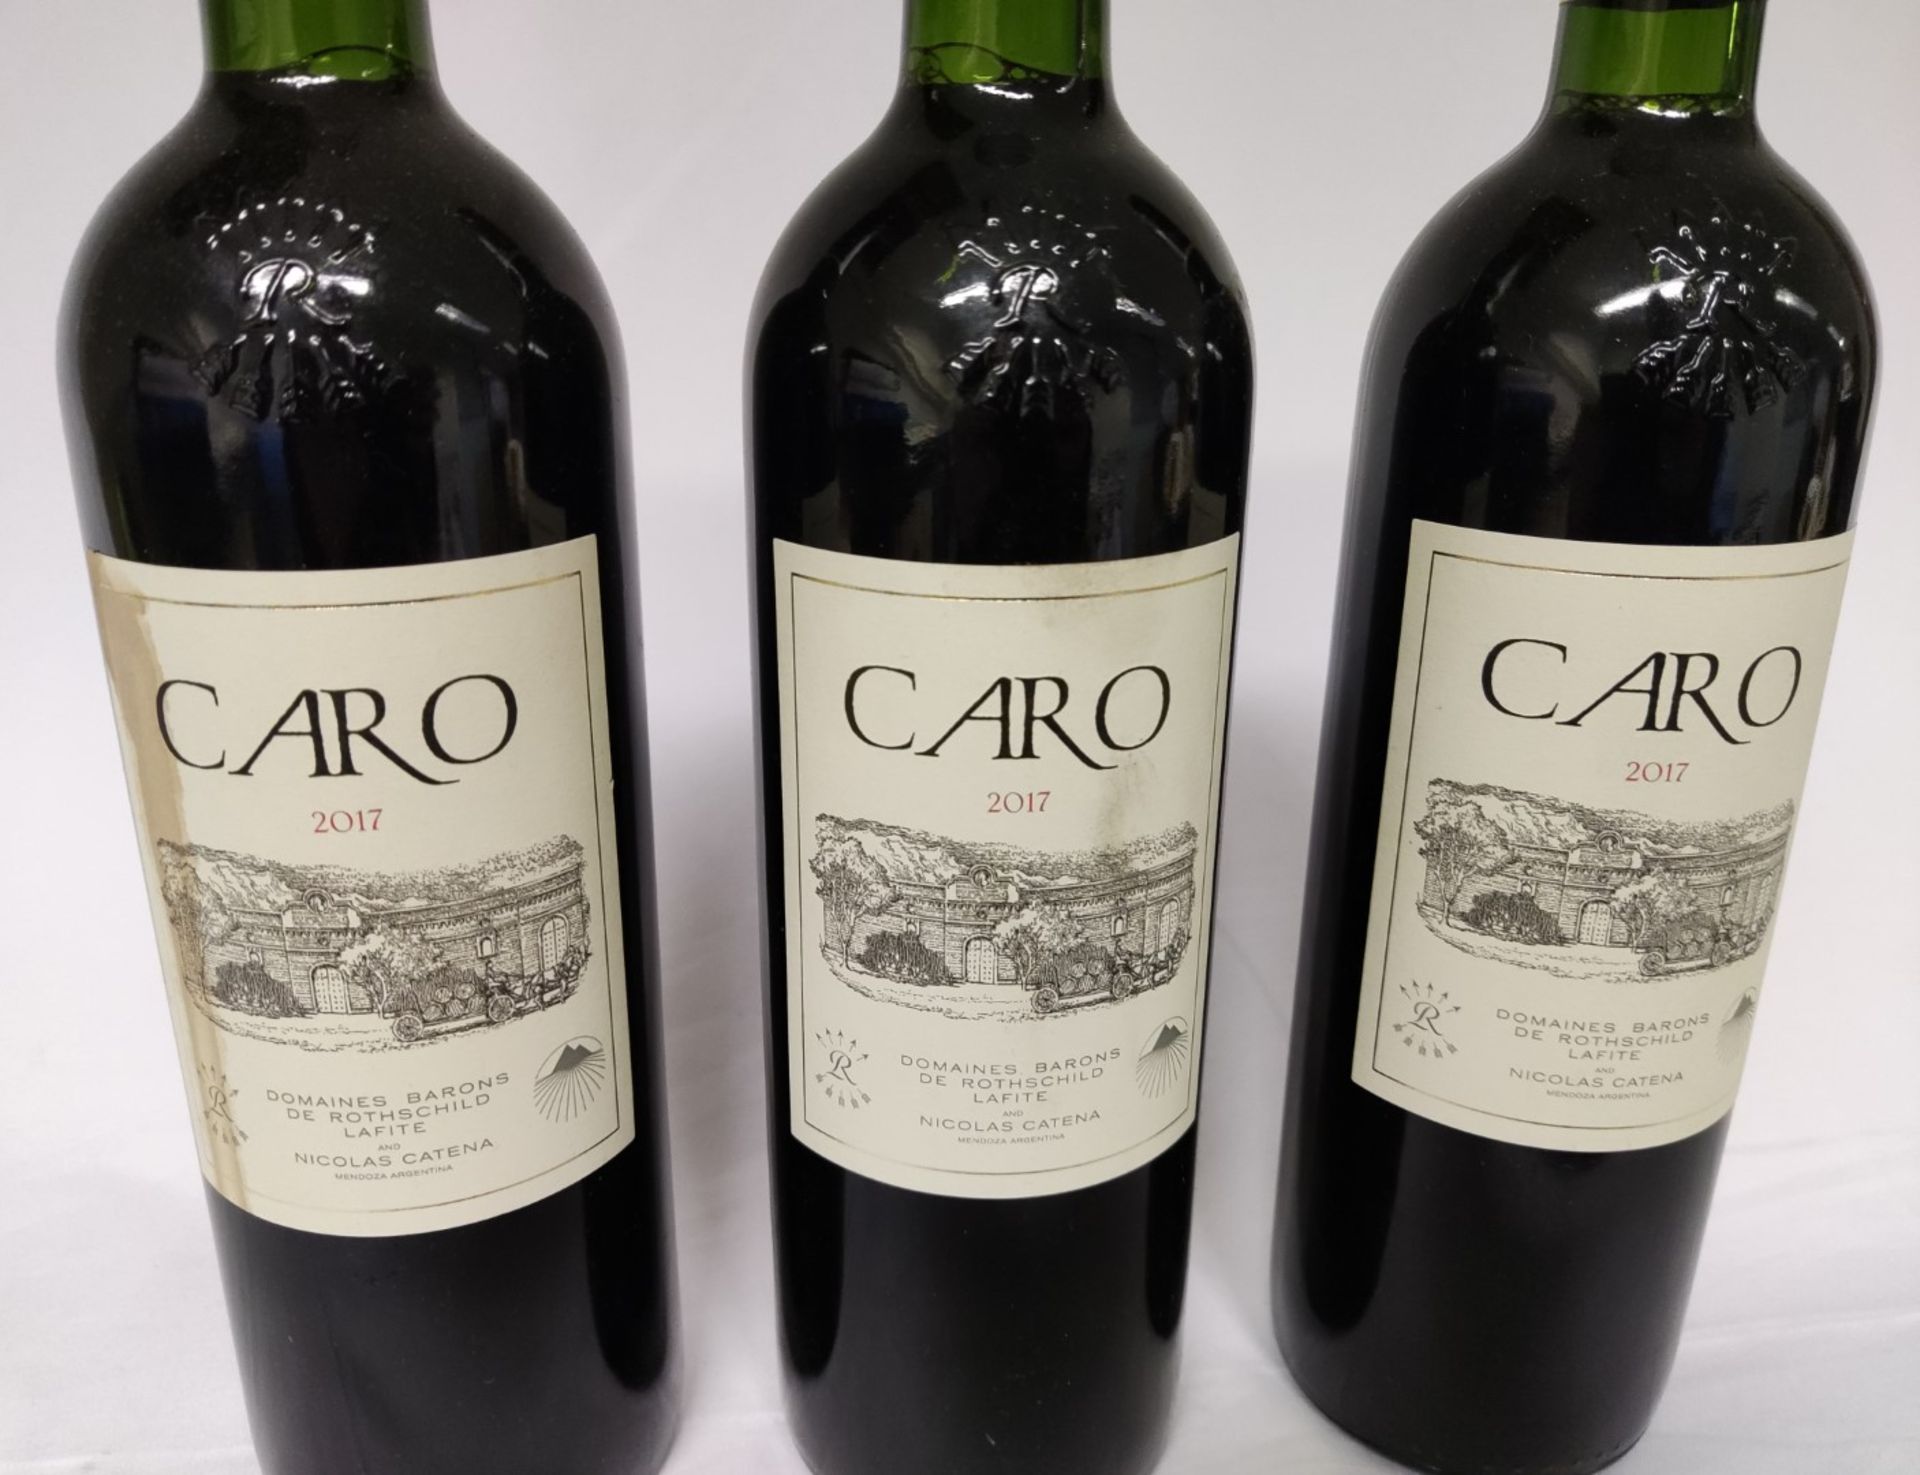 3 x Bottles of 2017 Bodegas Caro, Domaines Barons De Rothschild Lafite And Nicolas Catena - Red Wine - Image 5 of 7